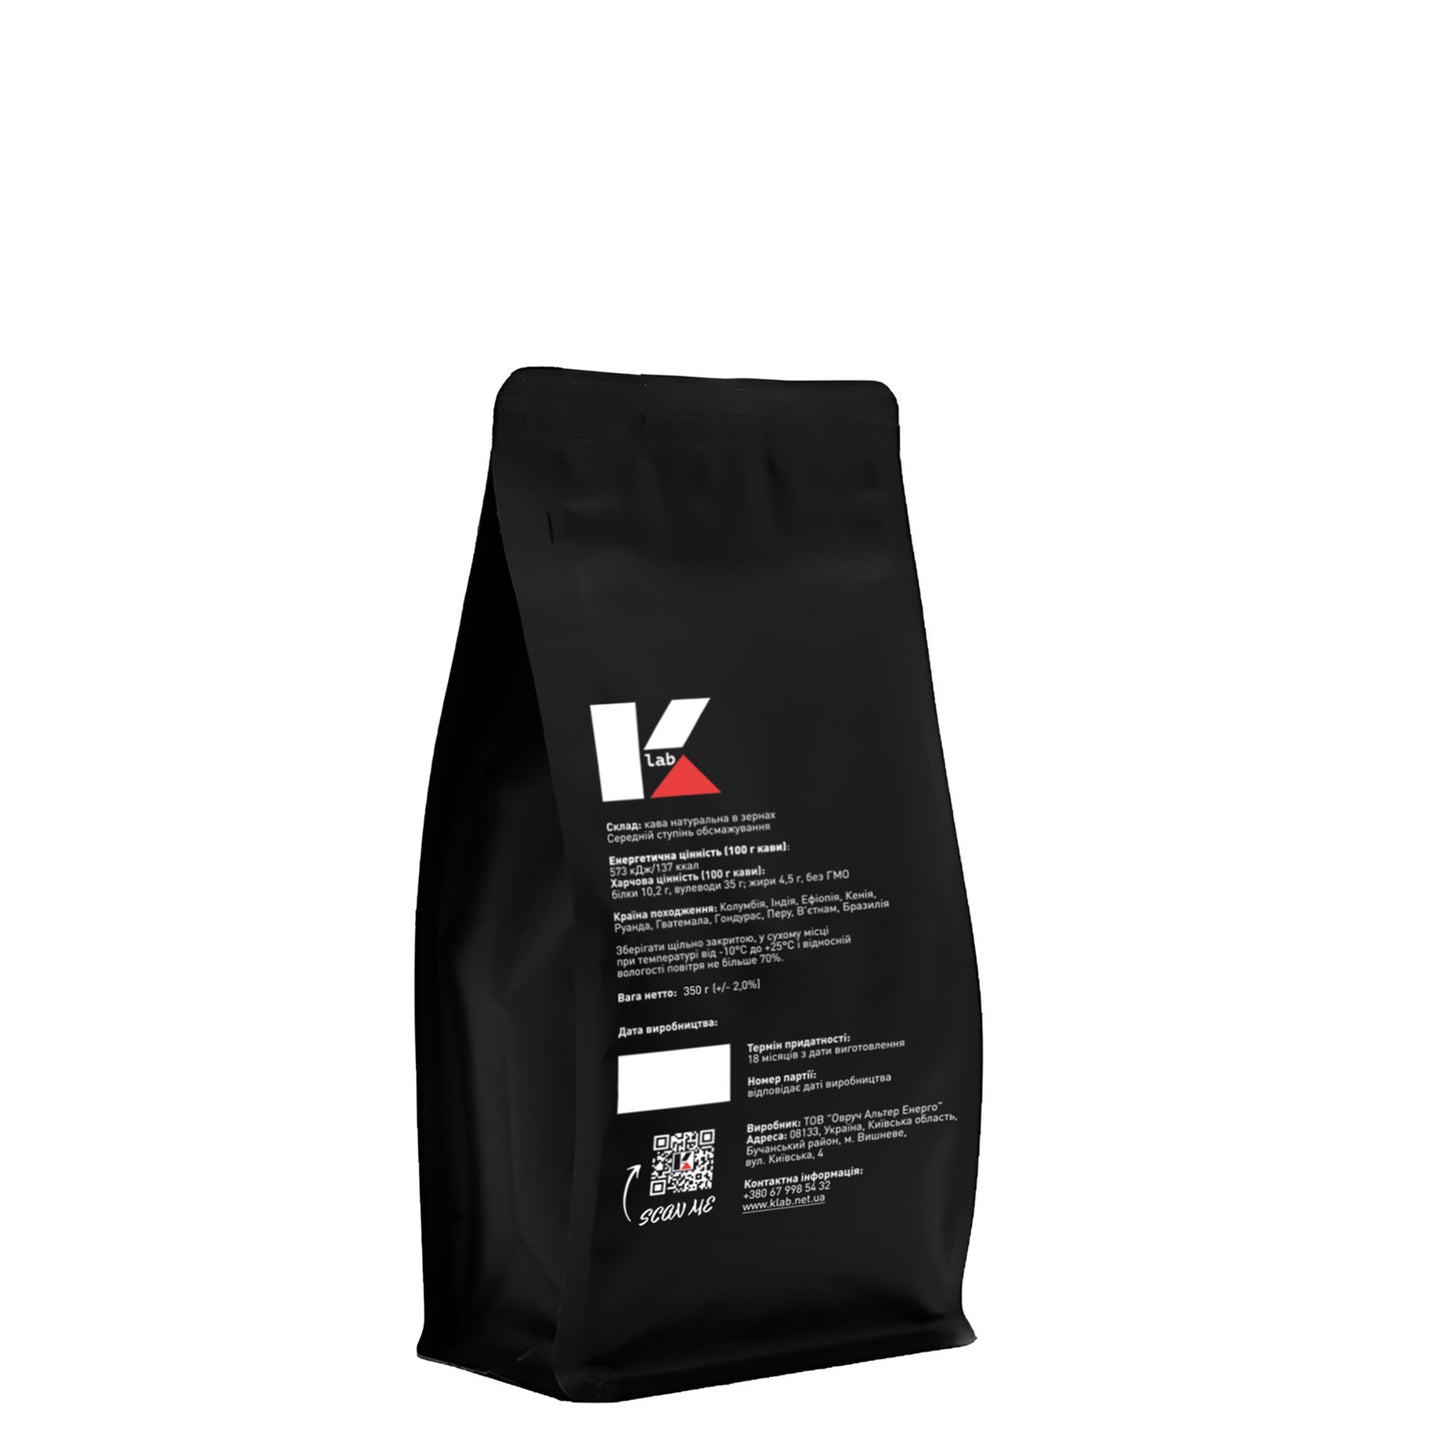 COFFEE STORY №7 - Klab (0.35kg back)